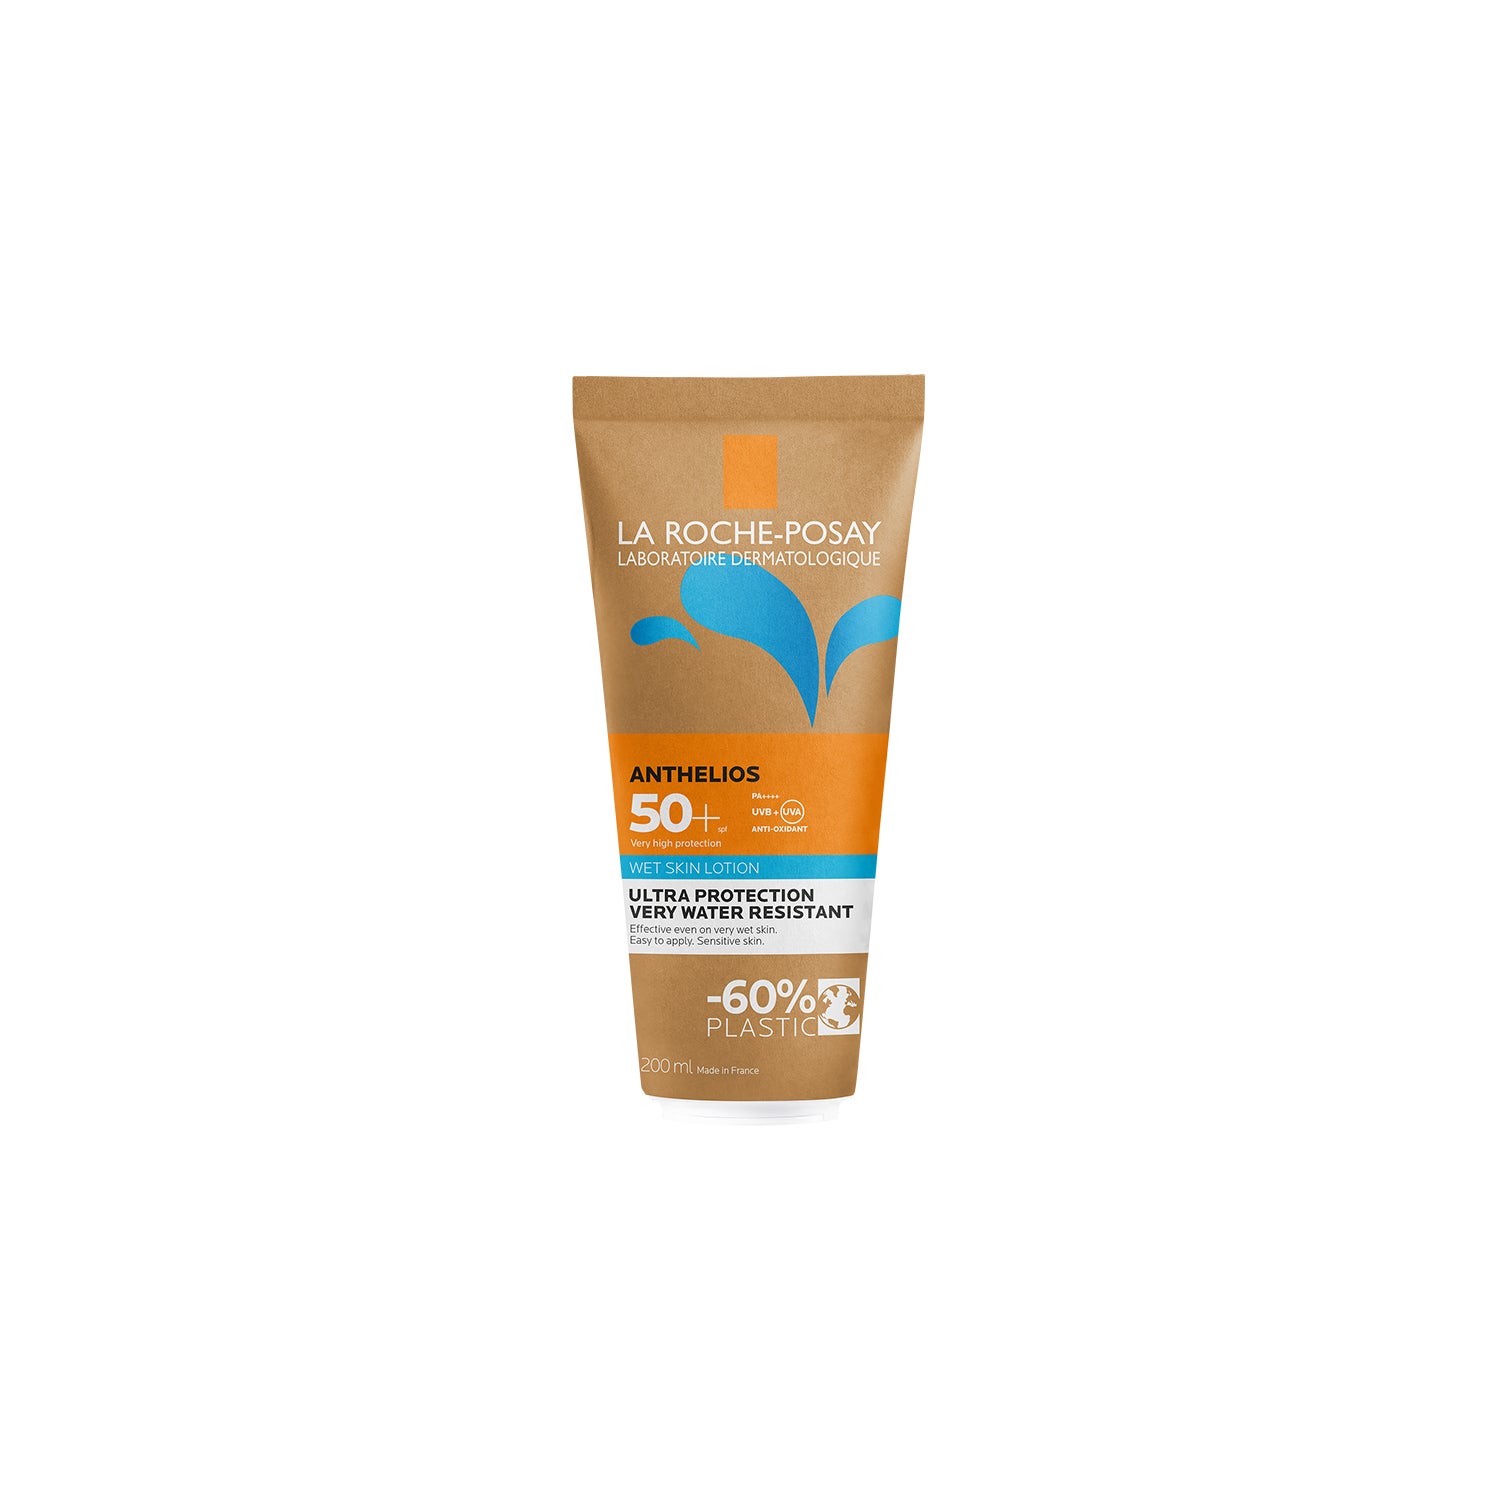 La Roche-Posay Anthelios Gel Wet Skin Spf50+ 200ml | PromoFarma